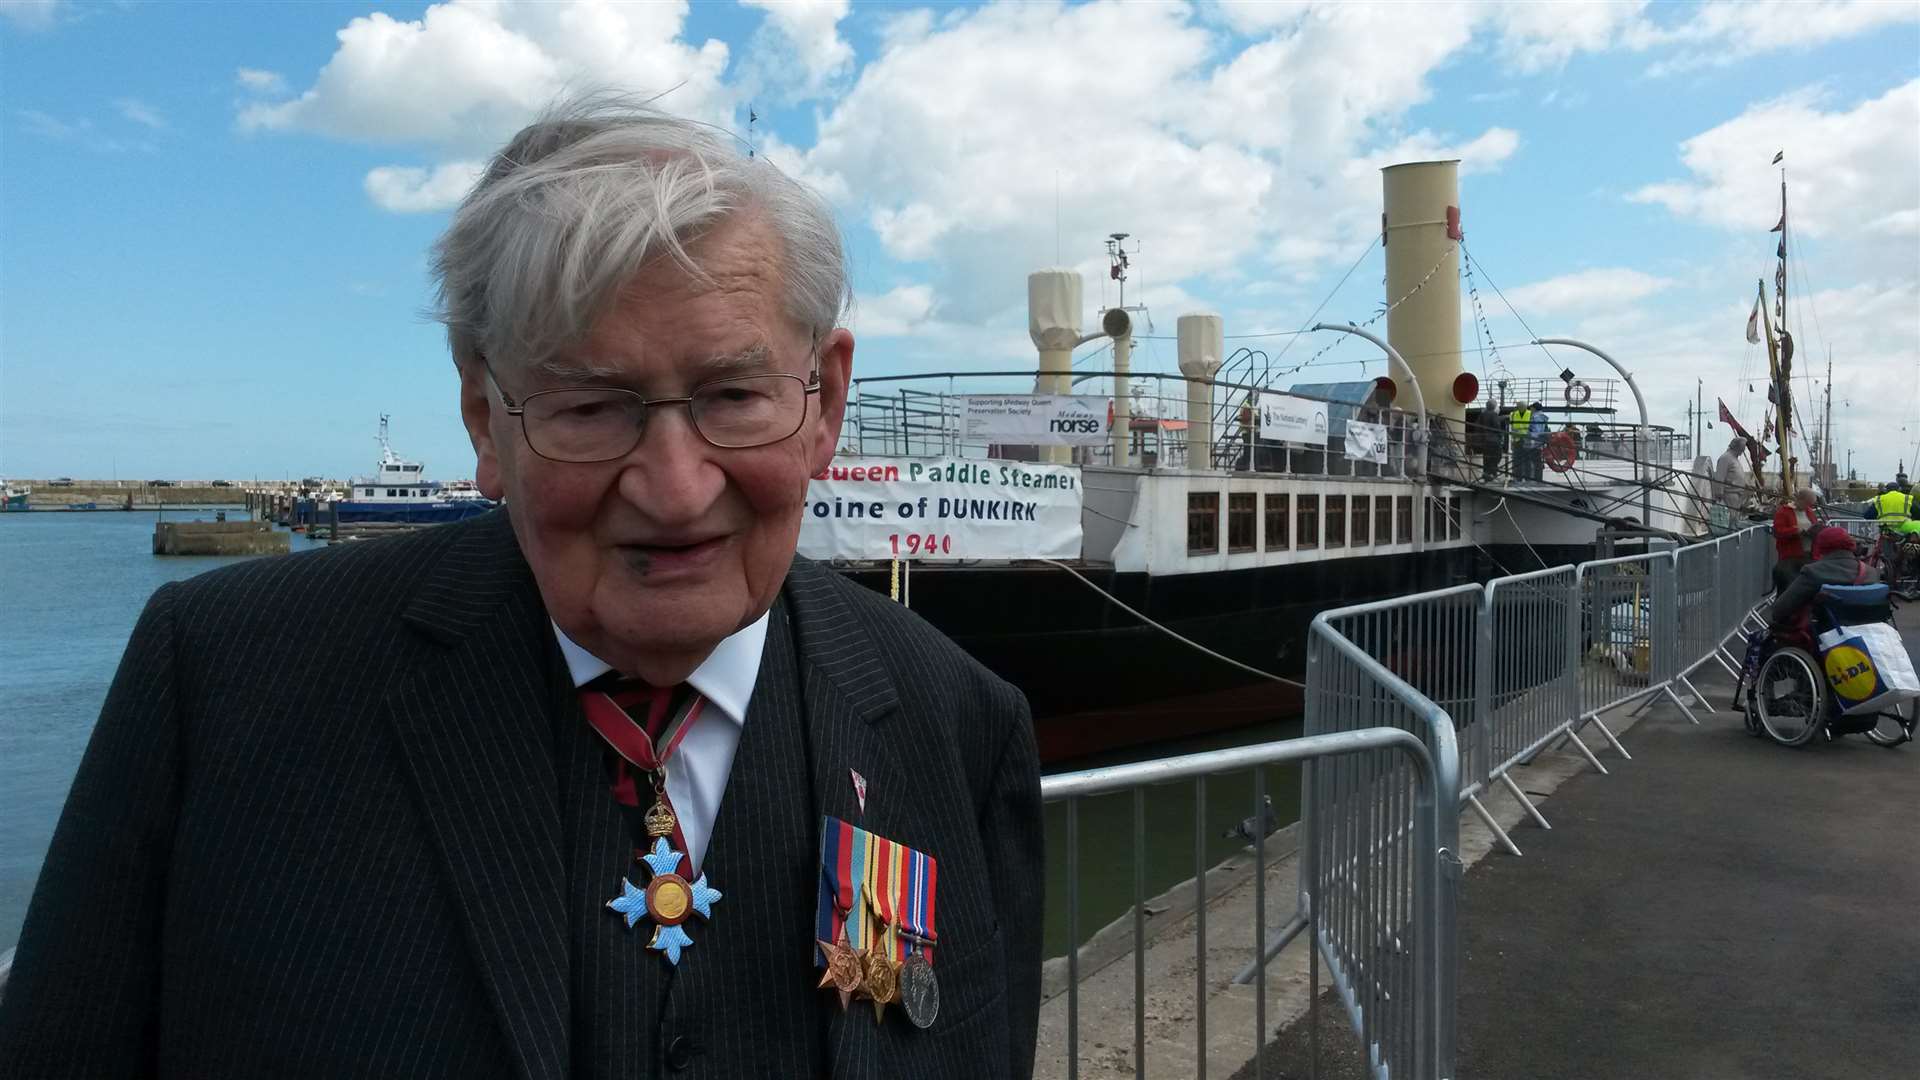 Dunkirk survivor John Clemetson